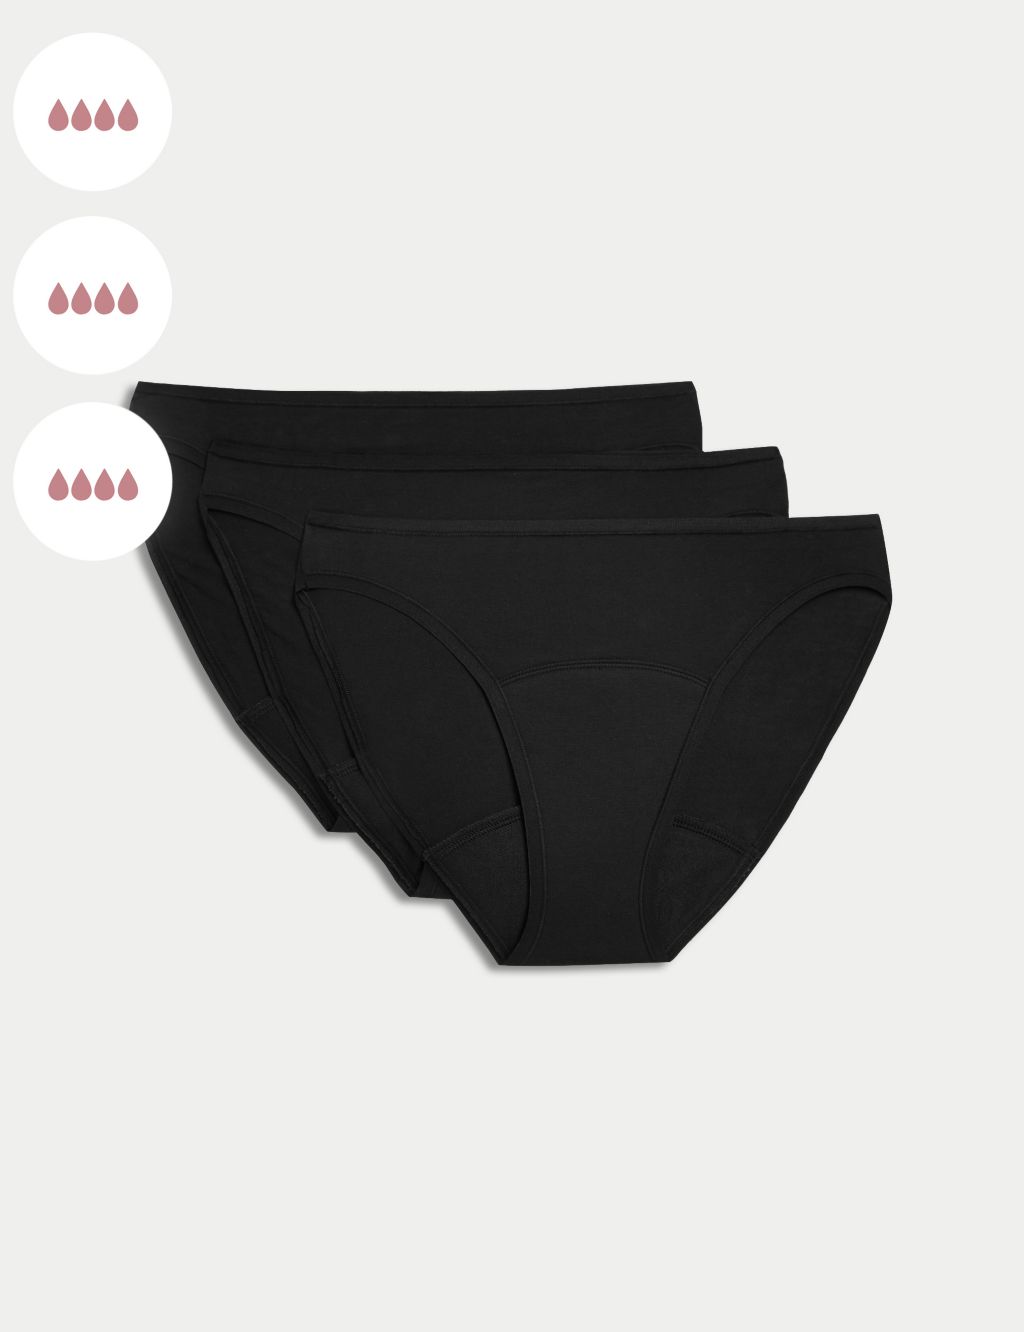 fluxies | Sleep Shorts - Super Heavy Period Pants